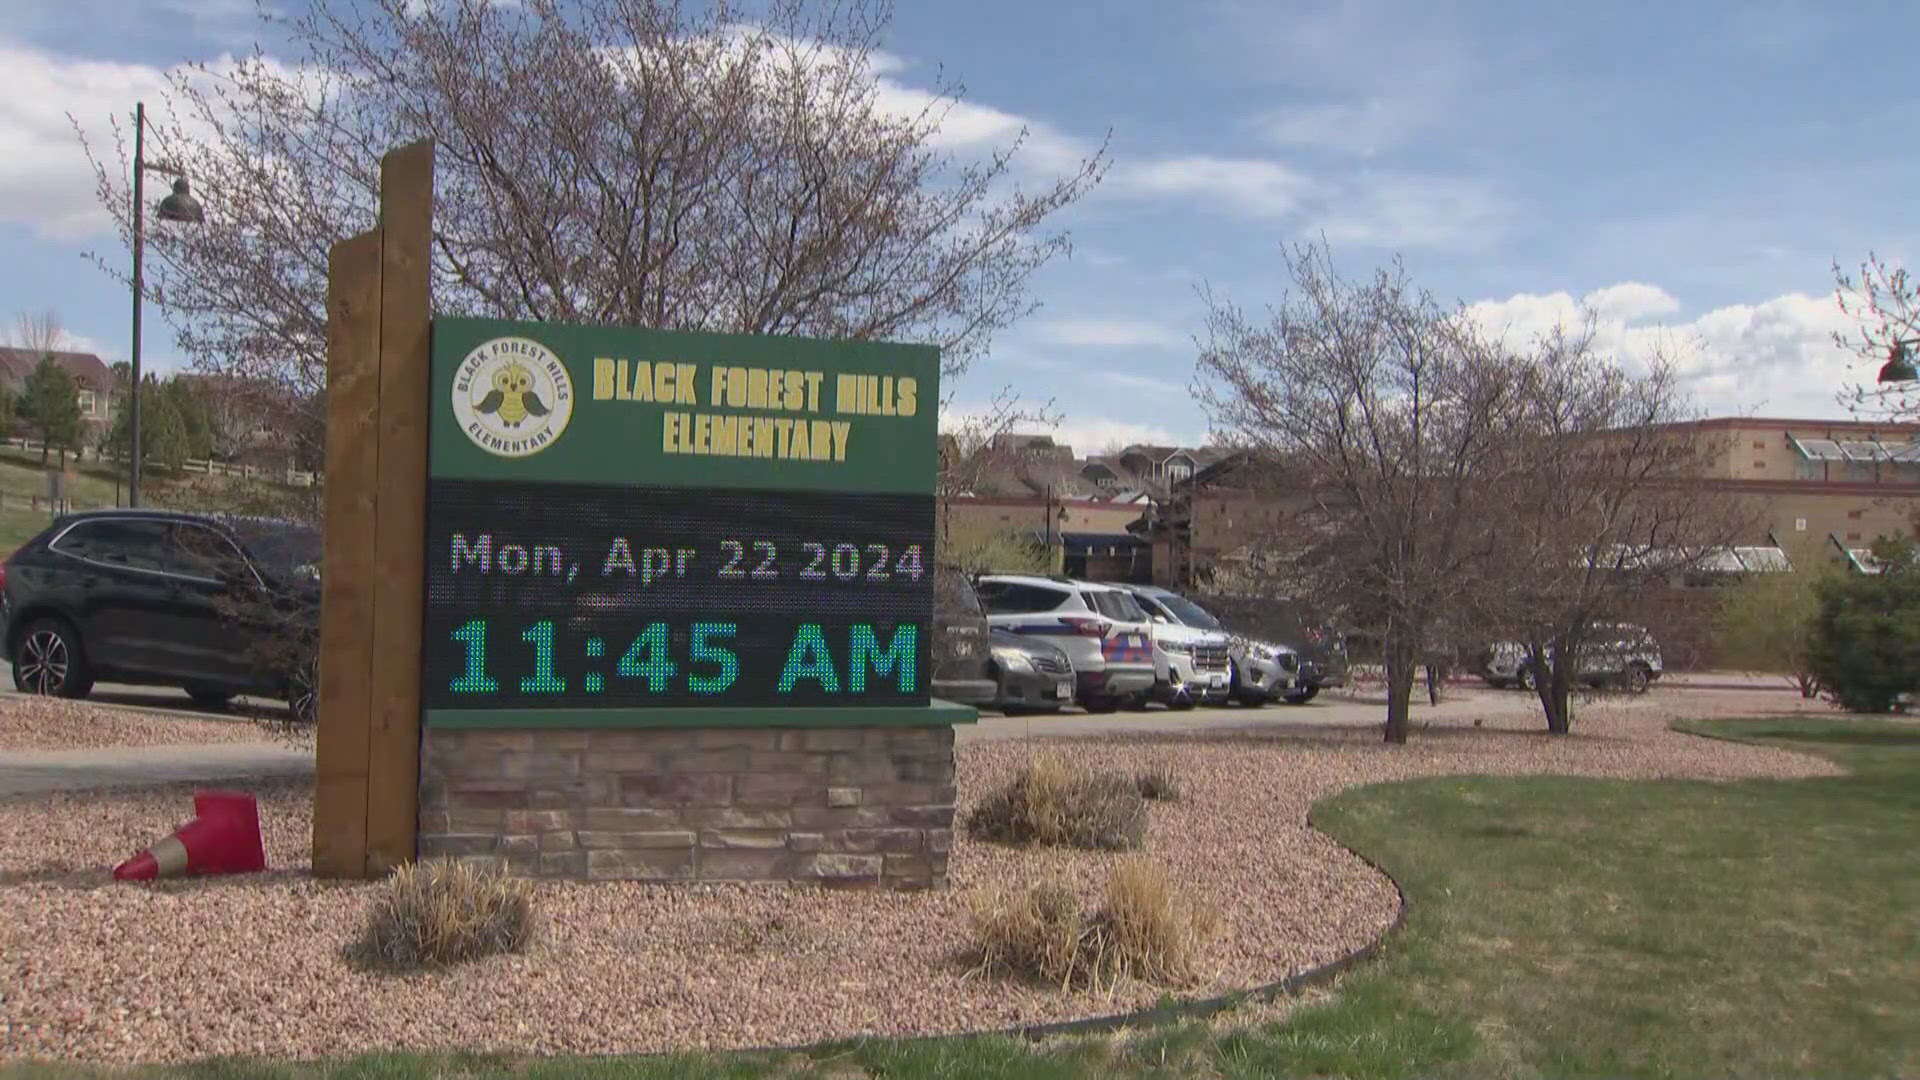 Black Forest Hills Elementary: principal won't return | 9news.com